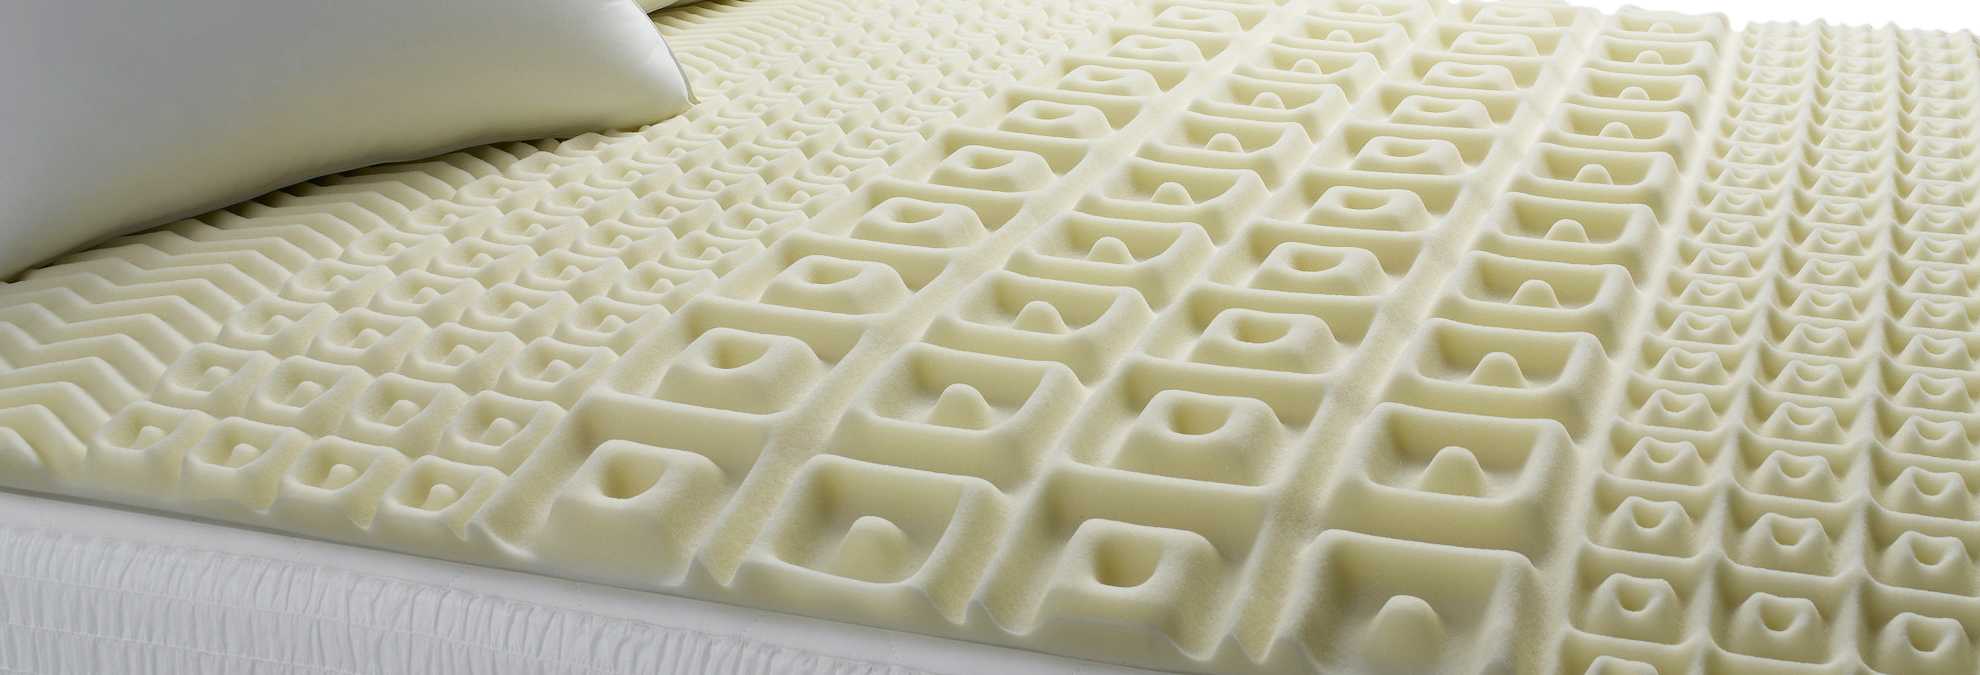 egg crate foam mattress